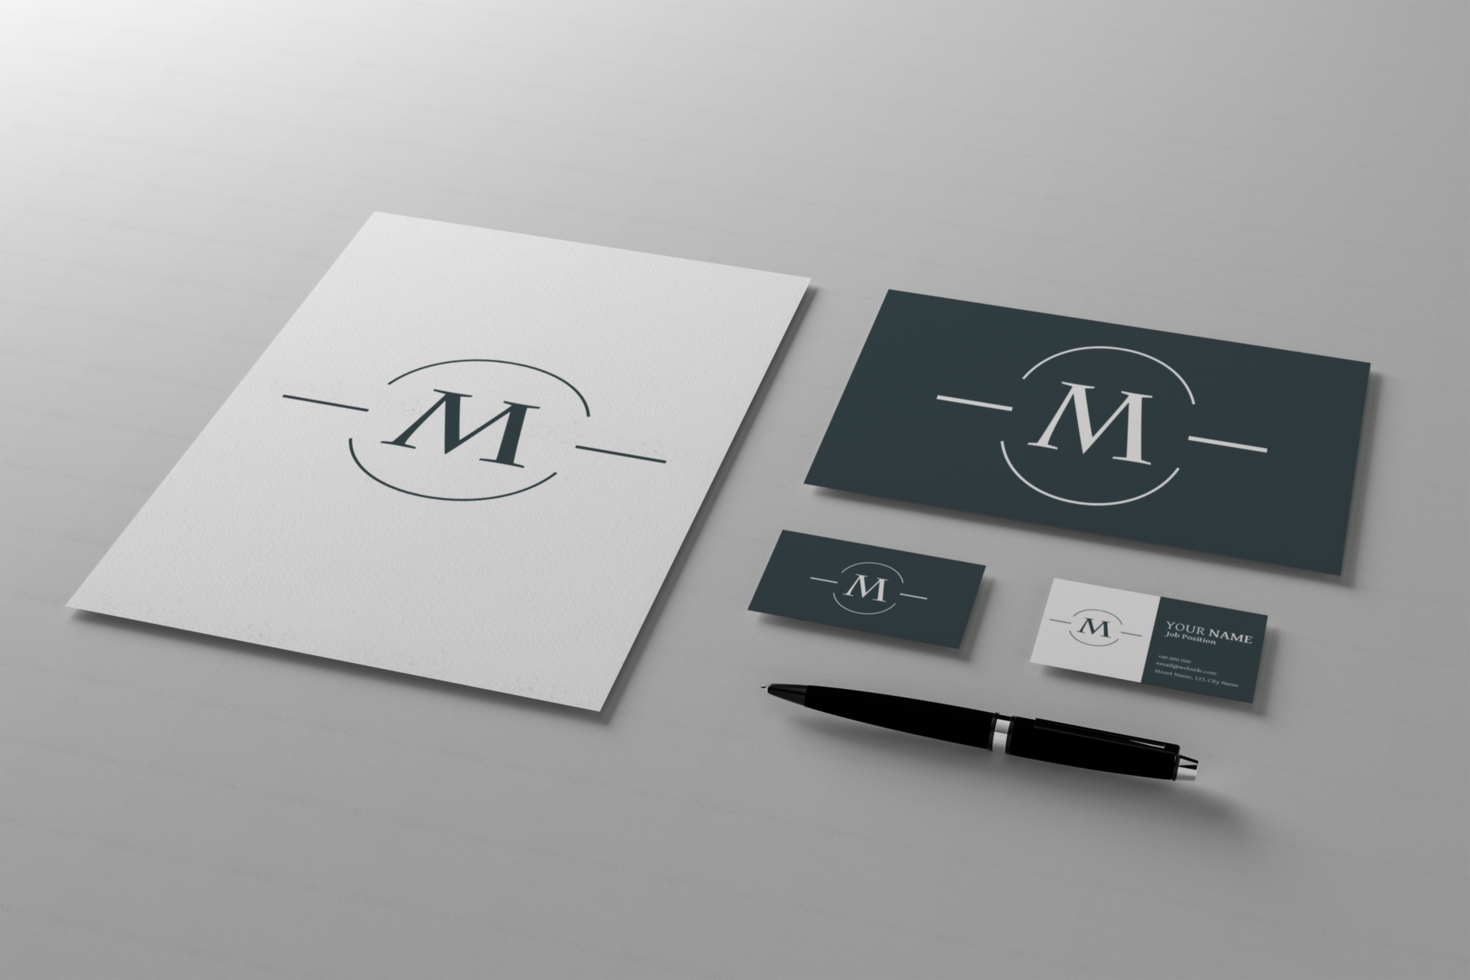 3D Illustration. Branding stationery design mockup. Template for branding design. Business concept. psd